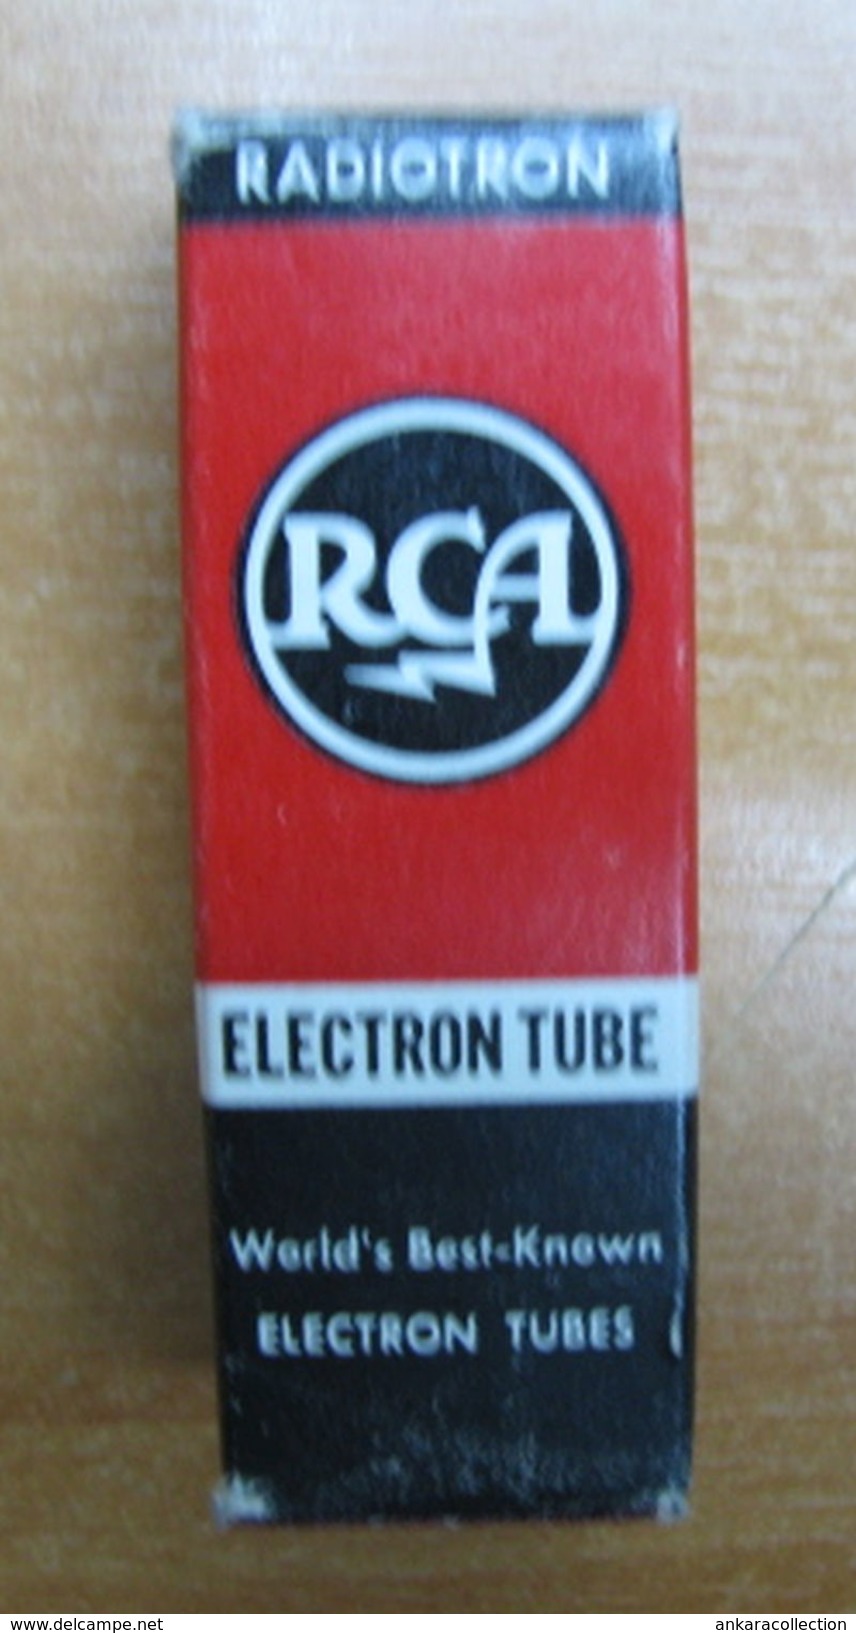 AC - RCA RADIOTRON ELECTRON TUBE MADE IN USA - Tubi